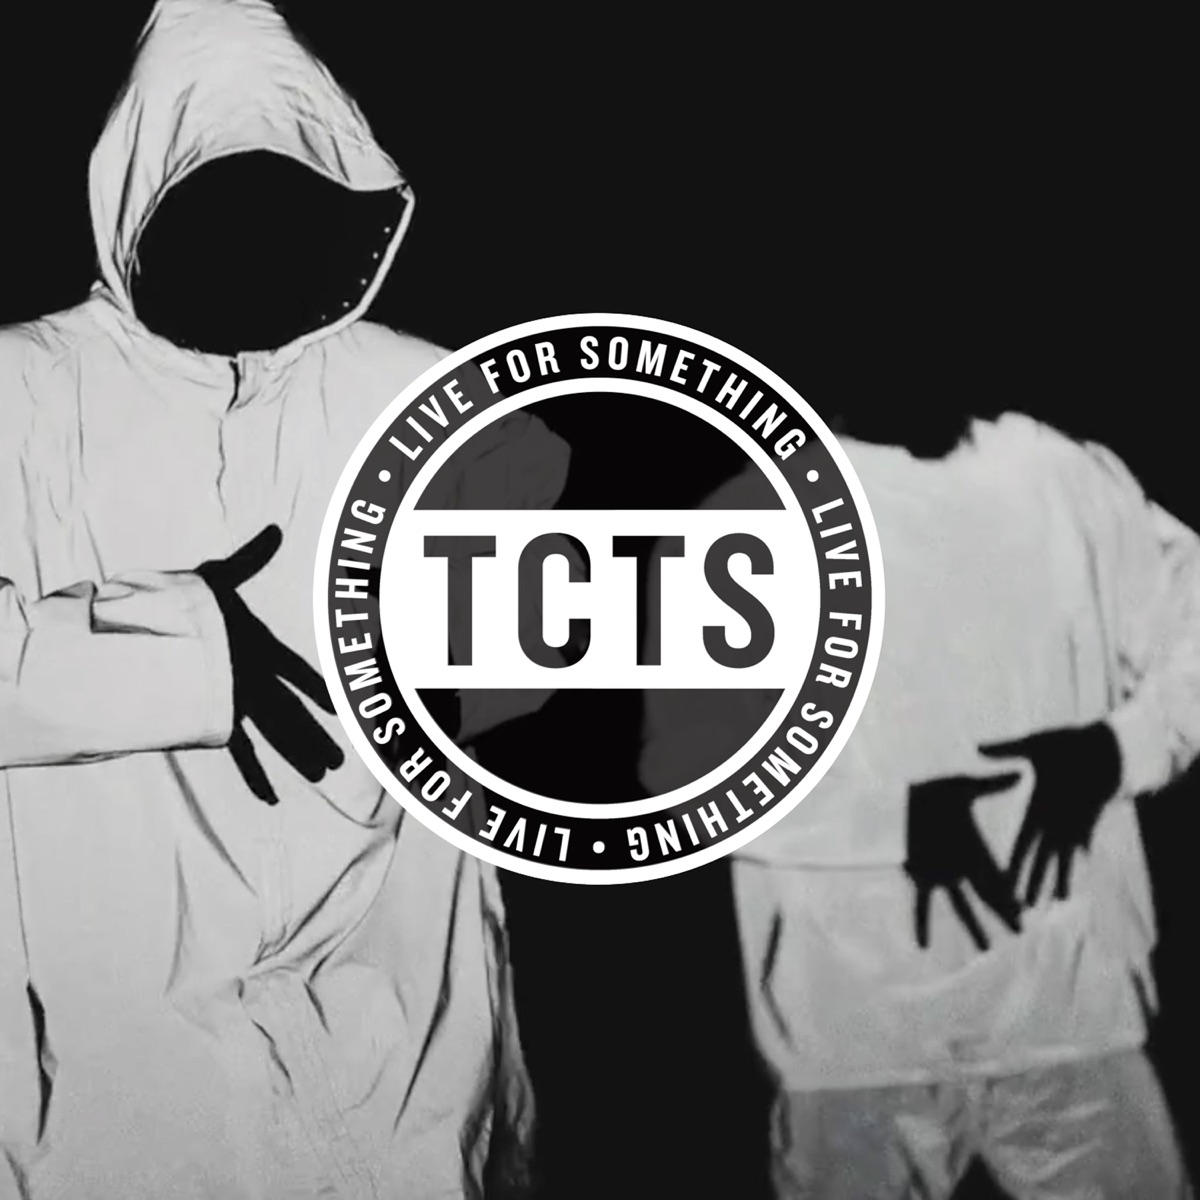 TCTS - Take it Back - Ouvir Música